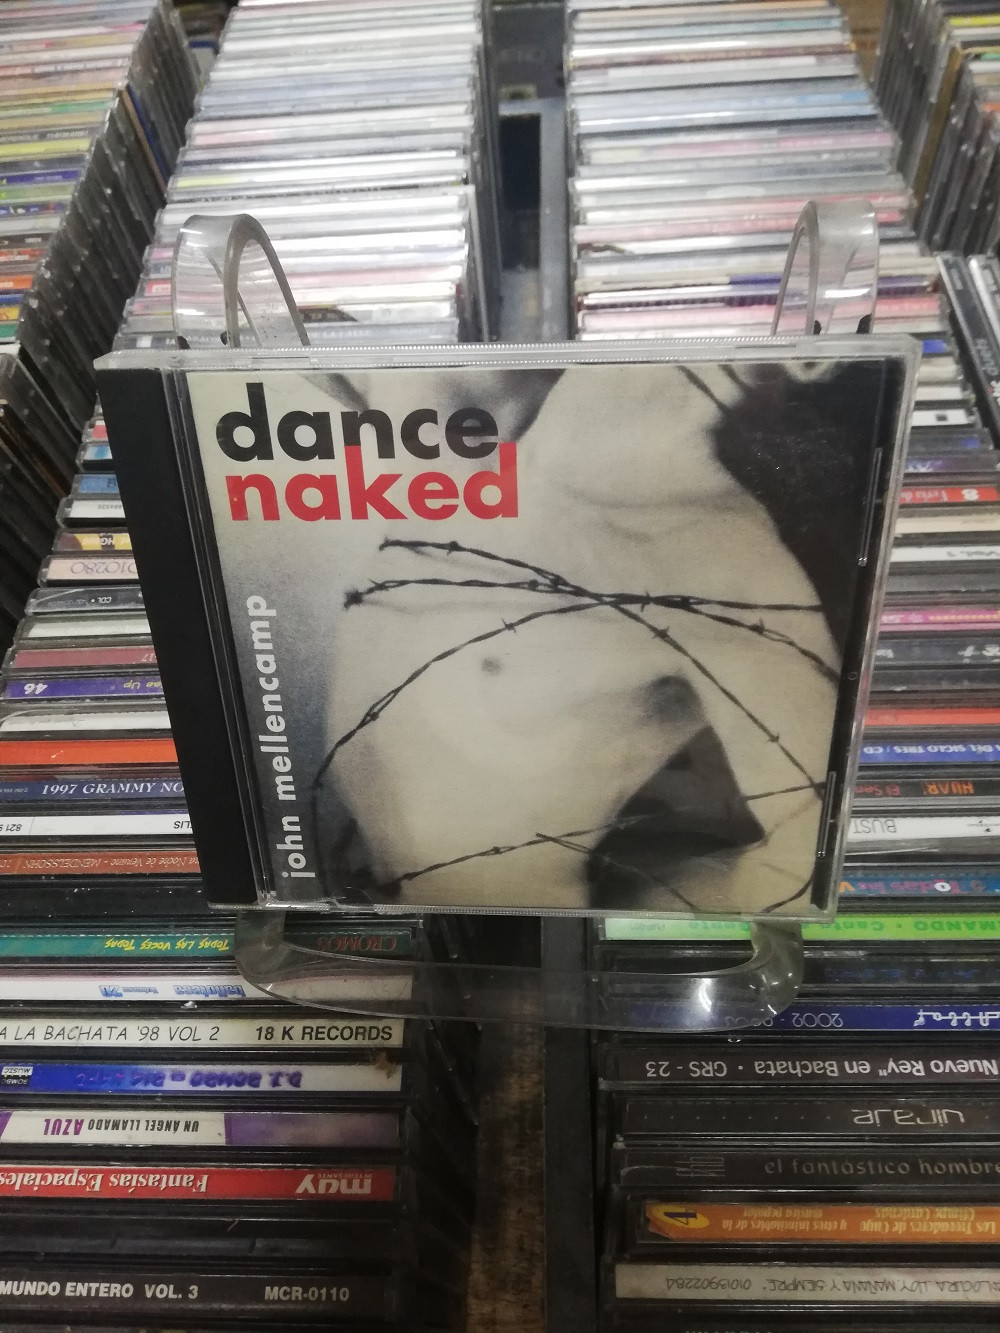 Imagen CD JHON MELLENCAMP - DANCE NAKED